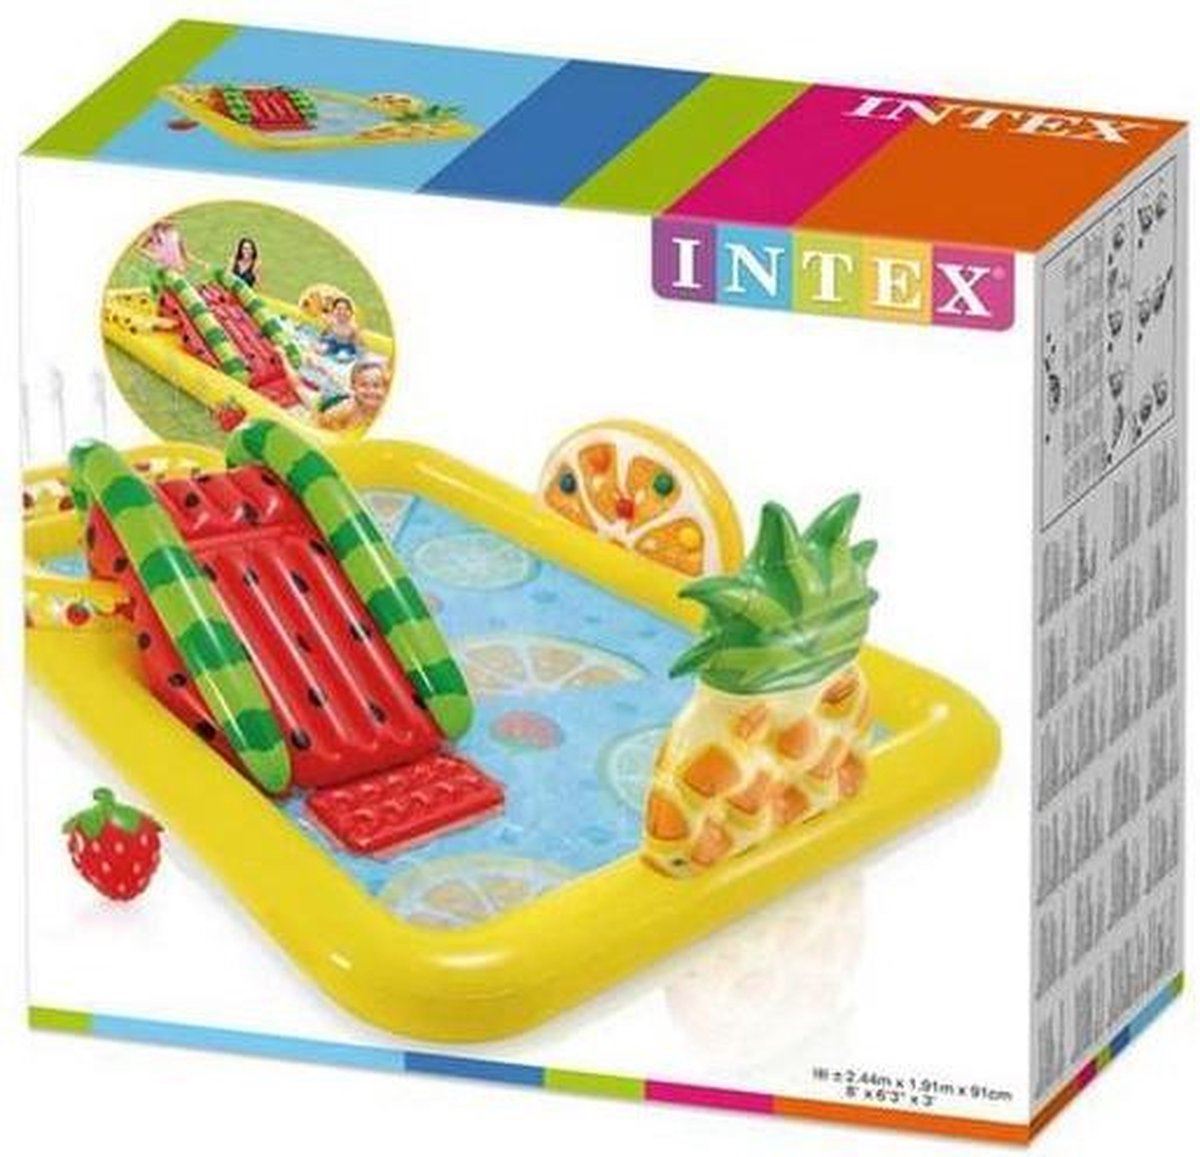 Fun-N-Fruit-Play-Center-244x191x91cm